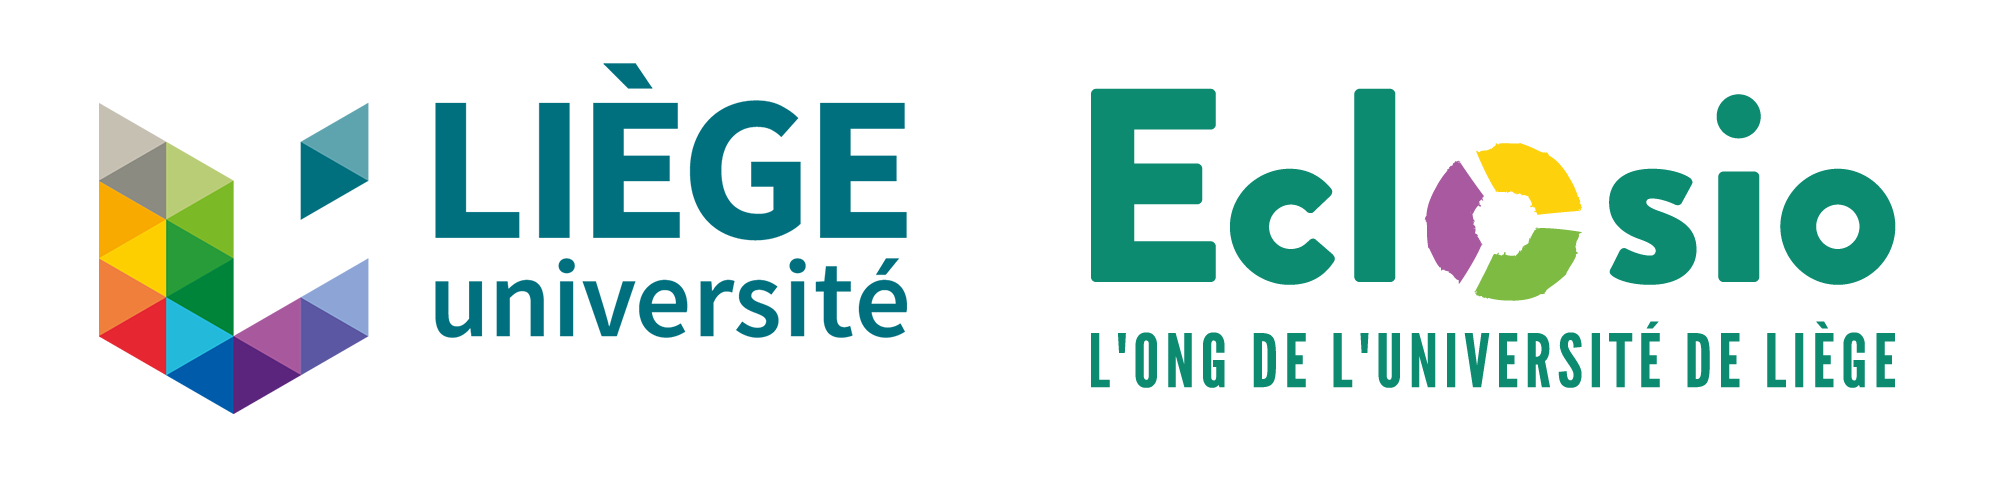 Logos ULiège & Eclosio (collaboration)